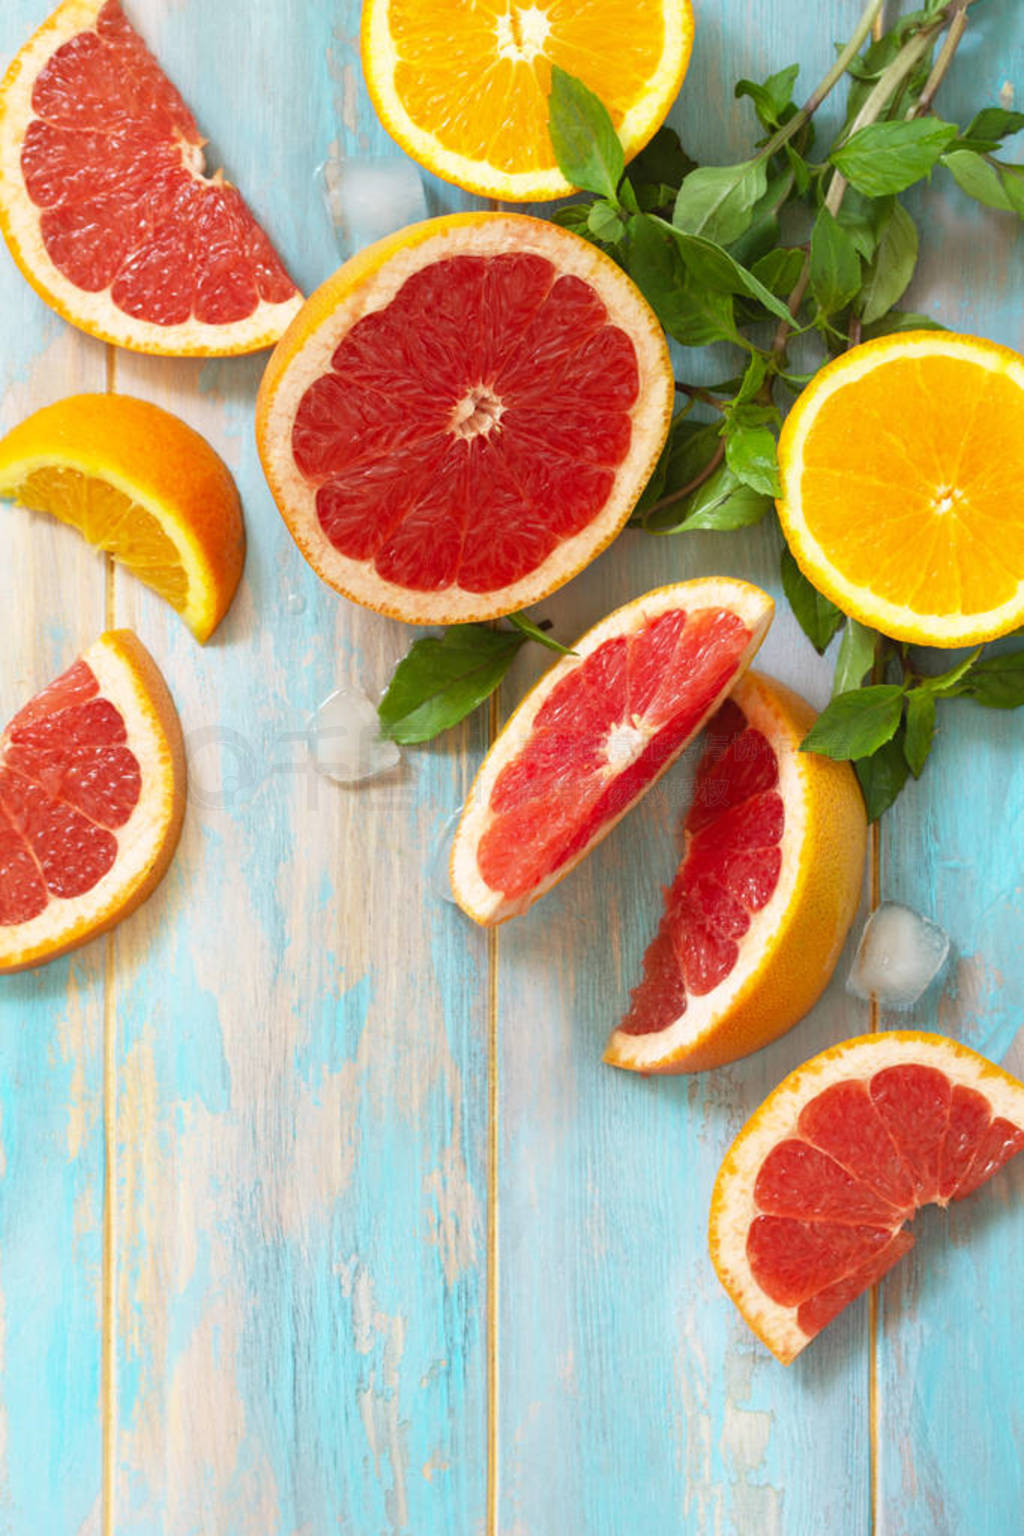 Ingredients for cooking a refreshing drink. Grapefruit, orange,